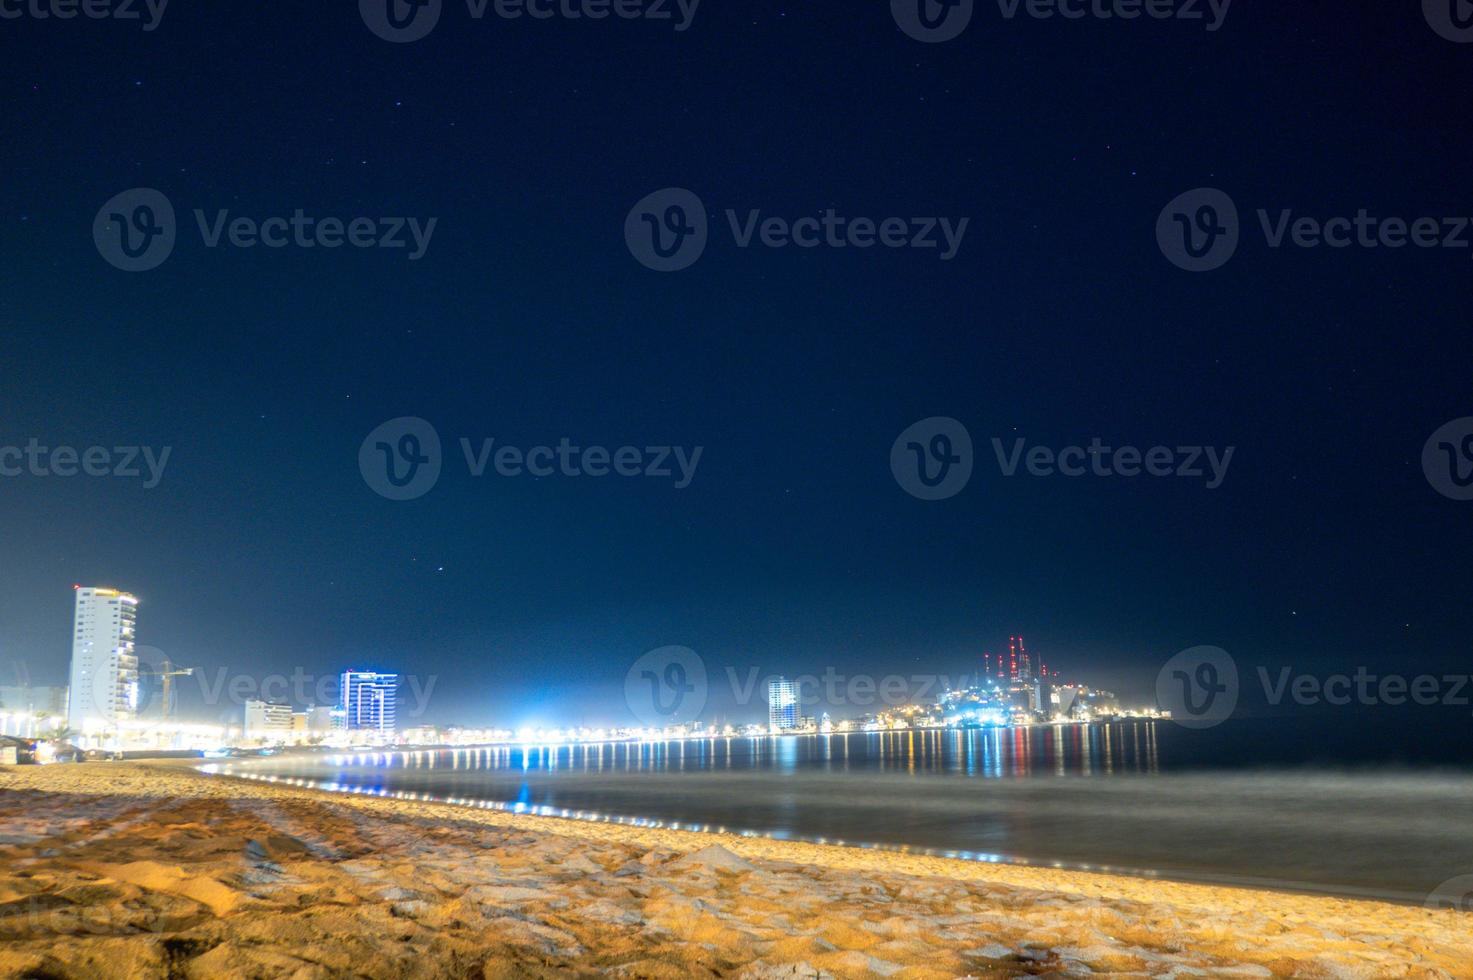 mazatlan sinaloa strand Bij nacht met lichtgevend stad in de achtergrond foto